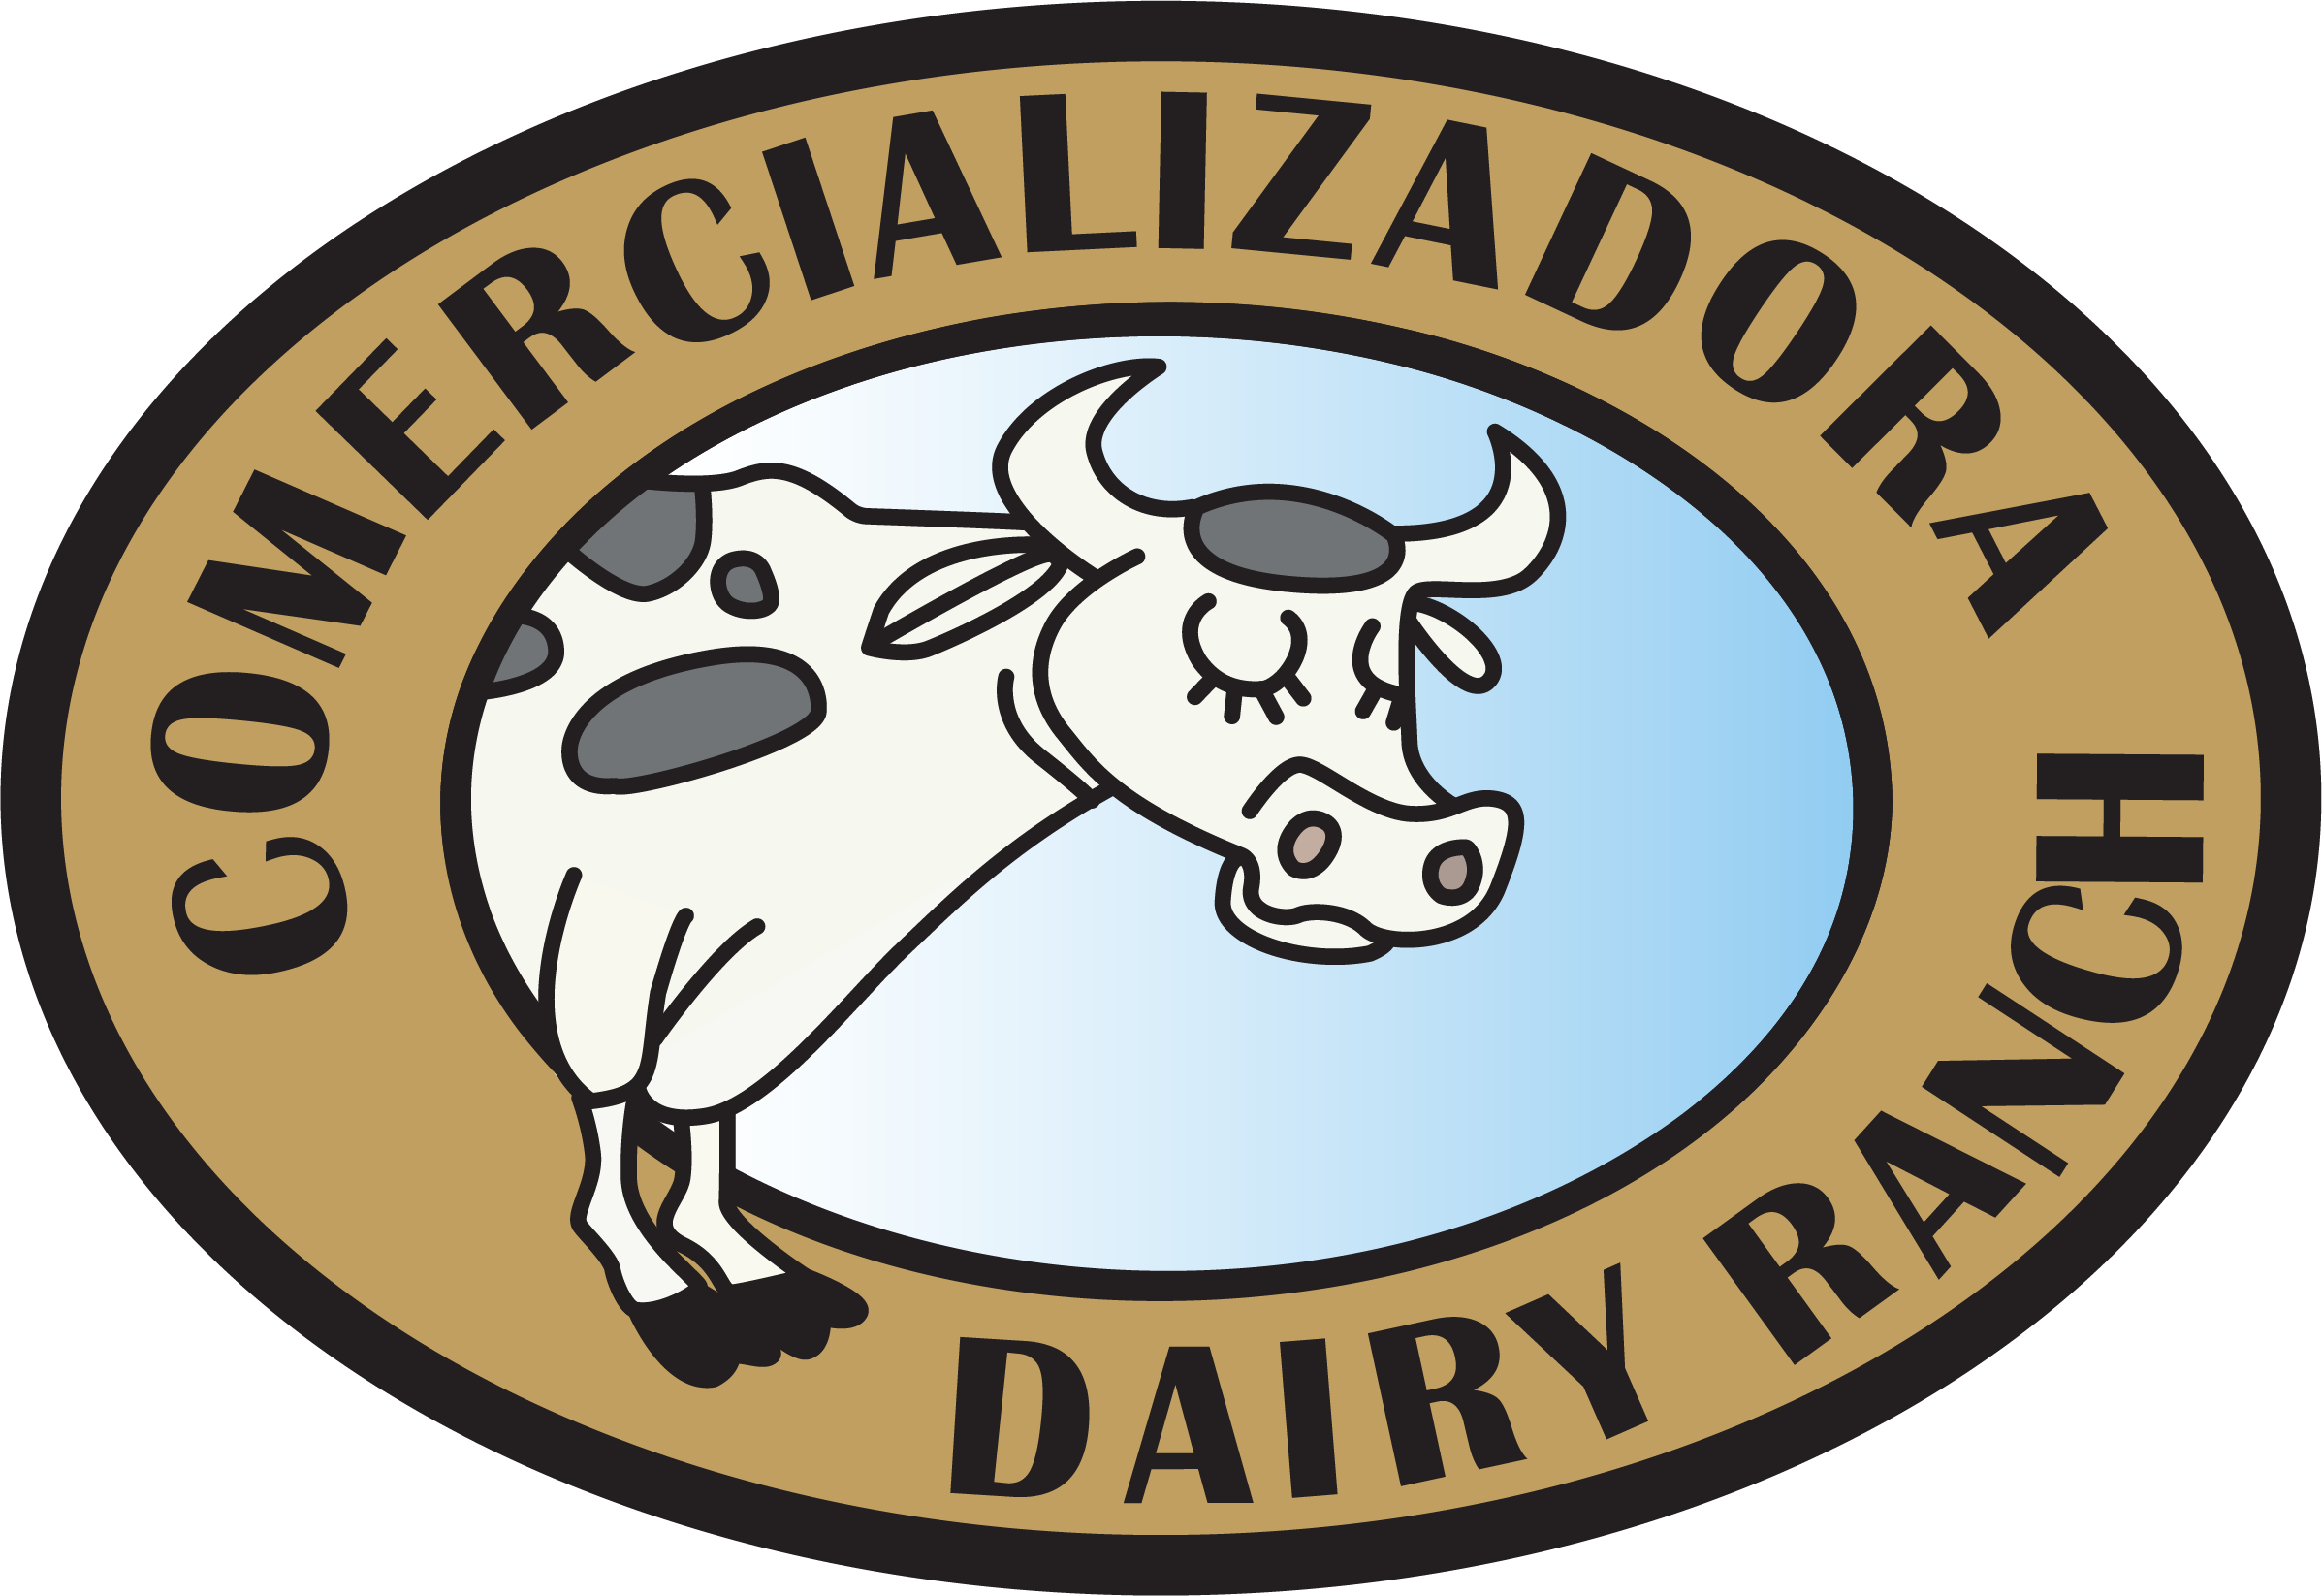 Dairy ranch